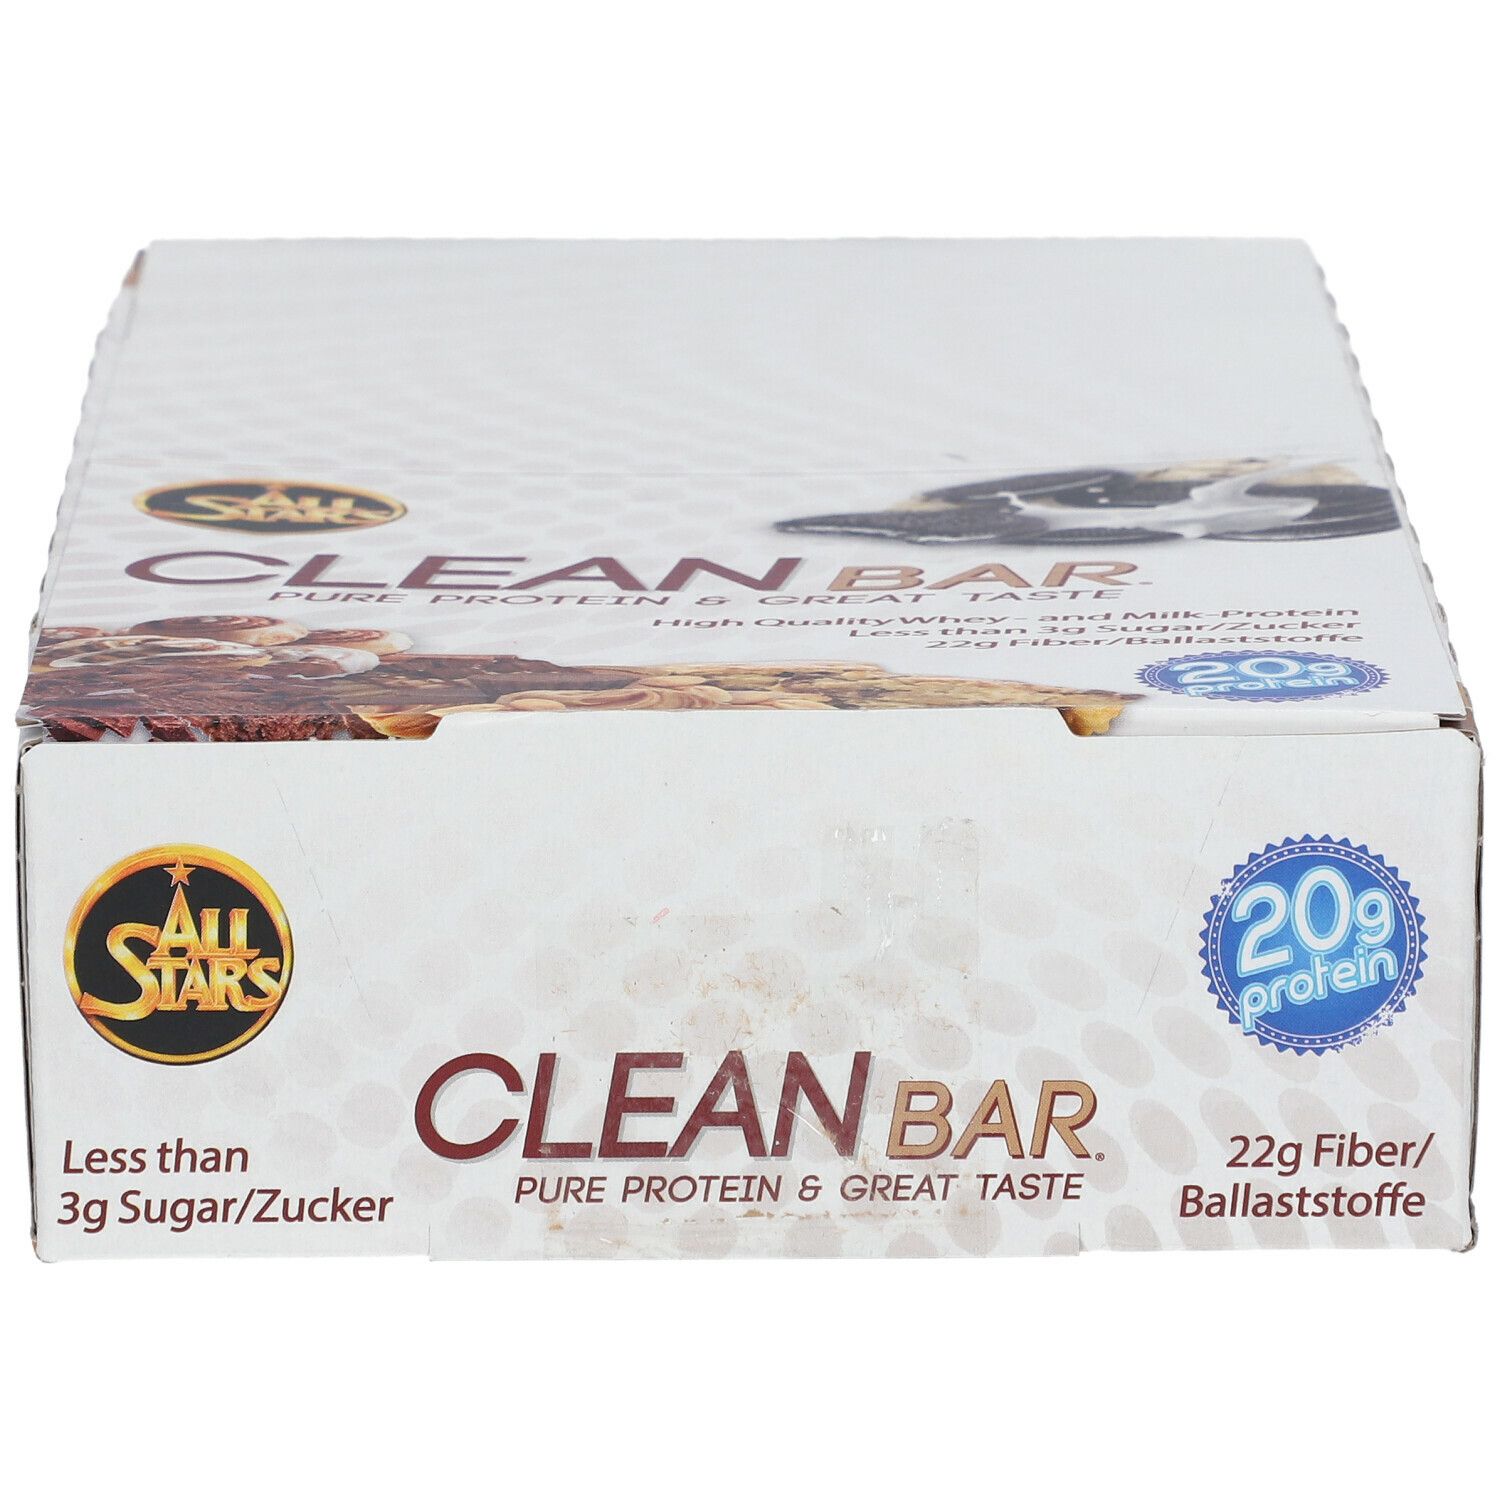 All Stars® Clean Bar Peanutbutter Chocolate